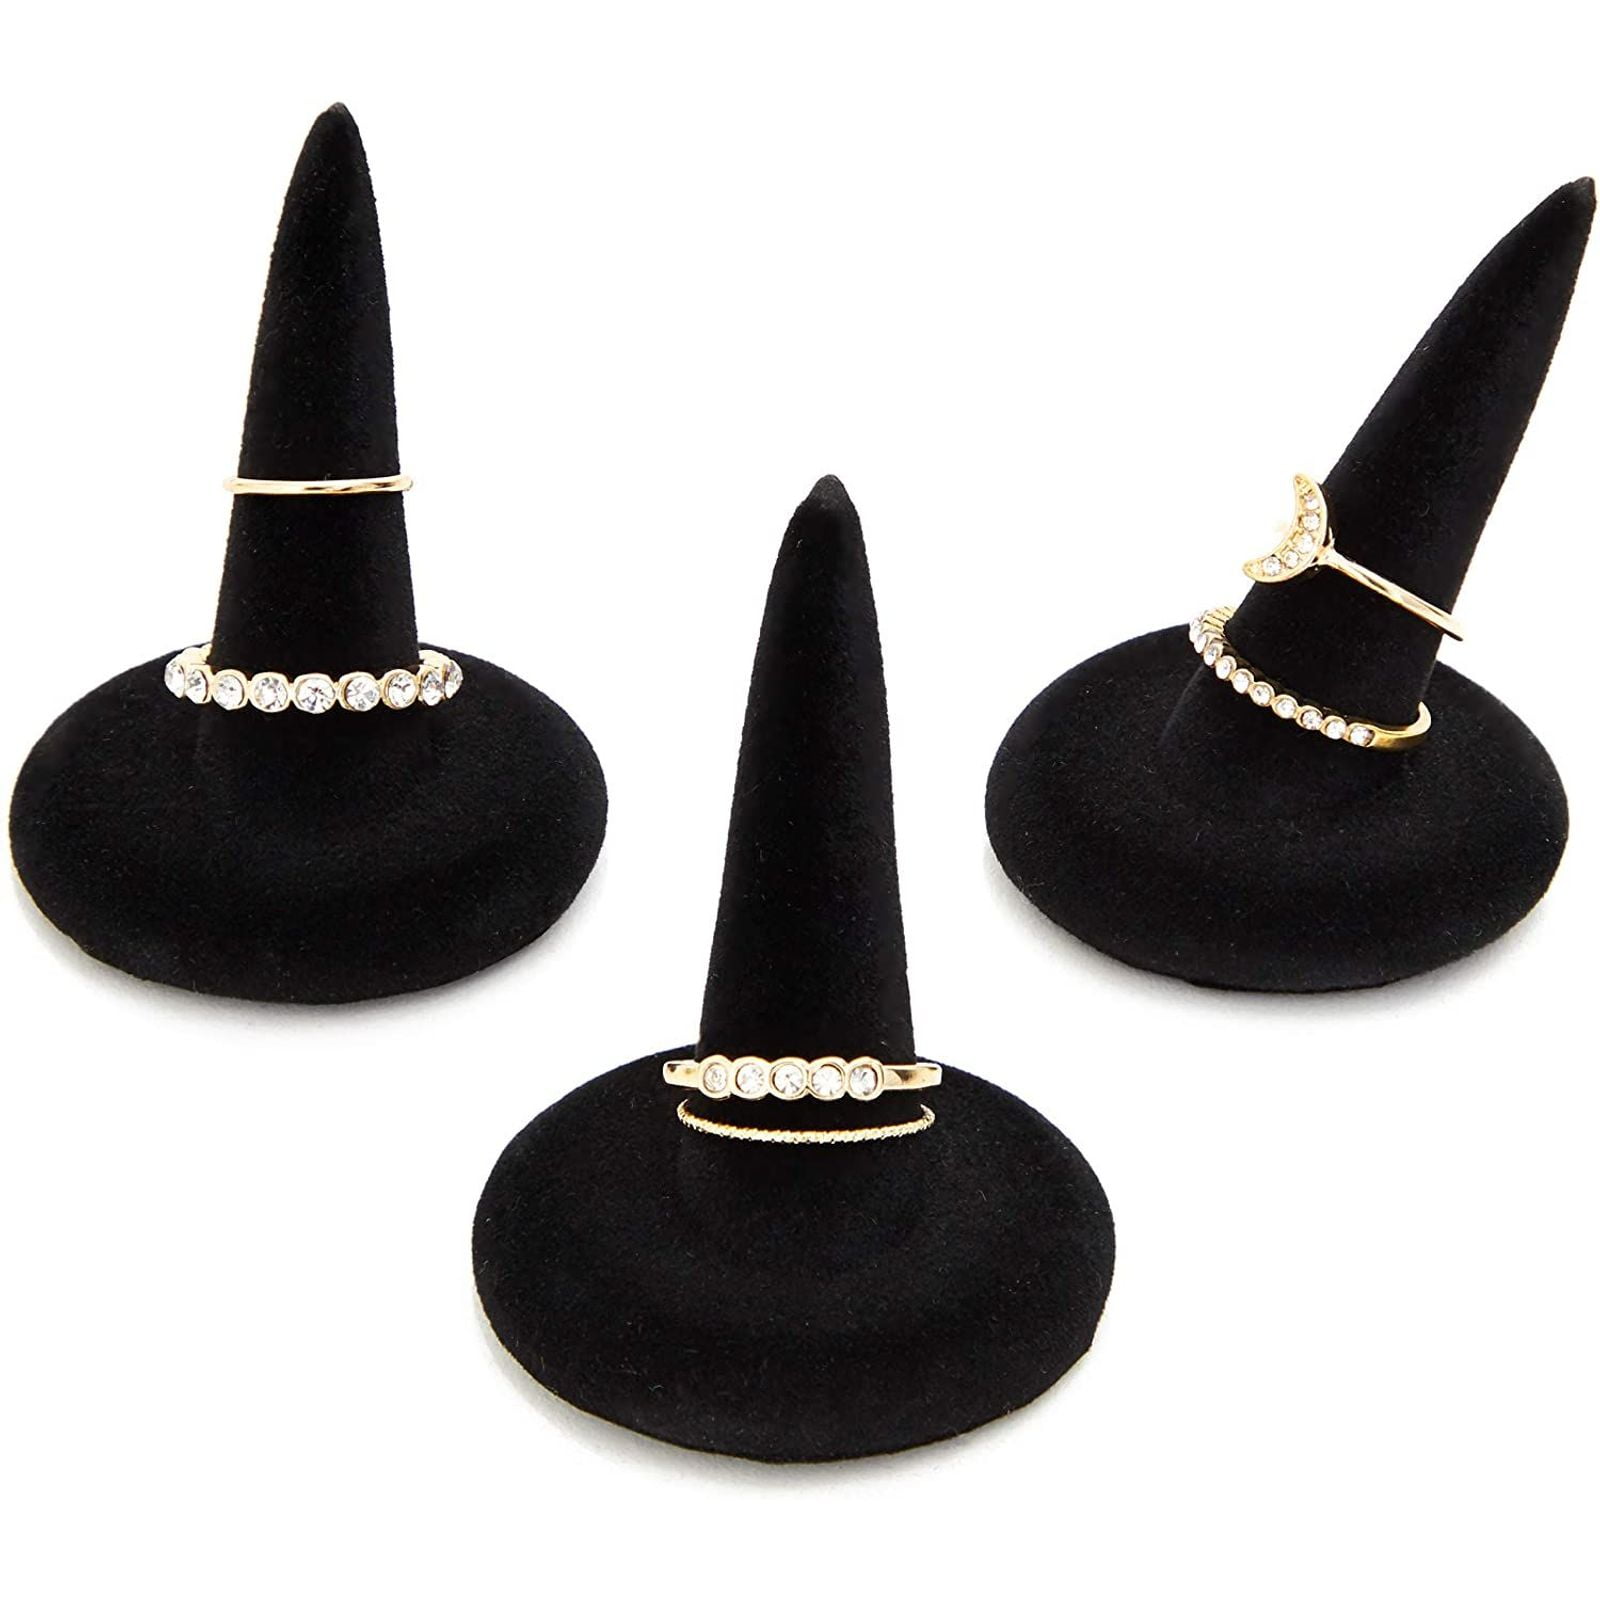 Elegant Black Single Singer Ring Jewellery Showcase Display Holder Stand Rack 